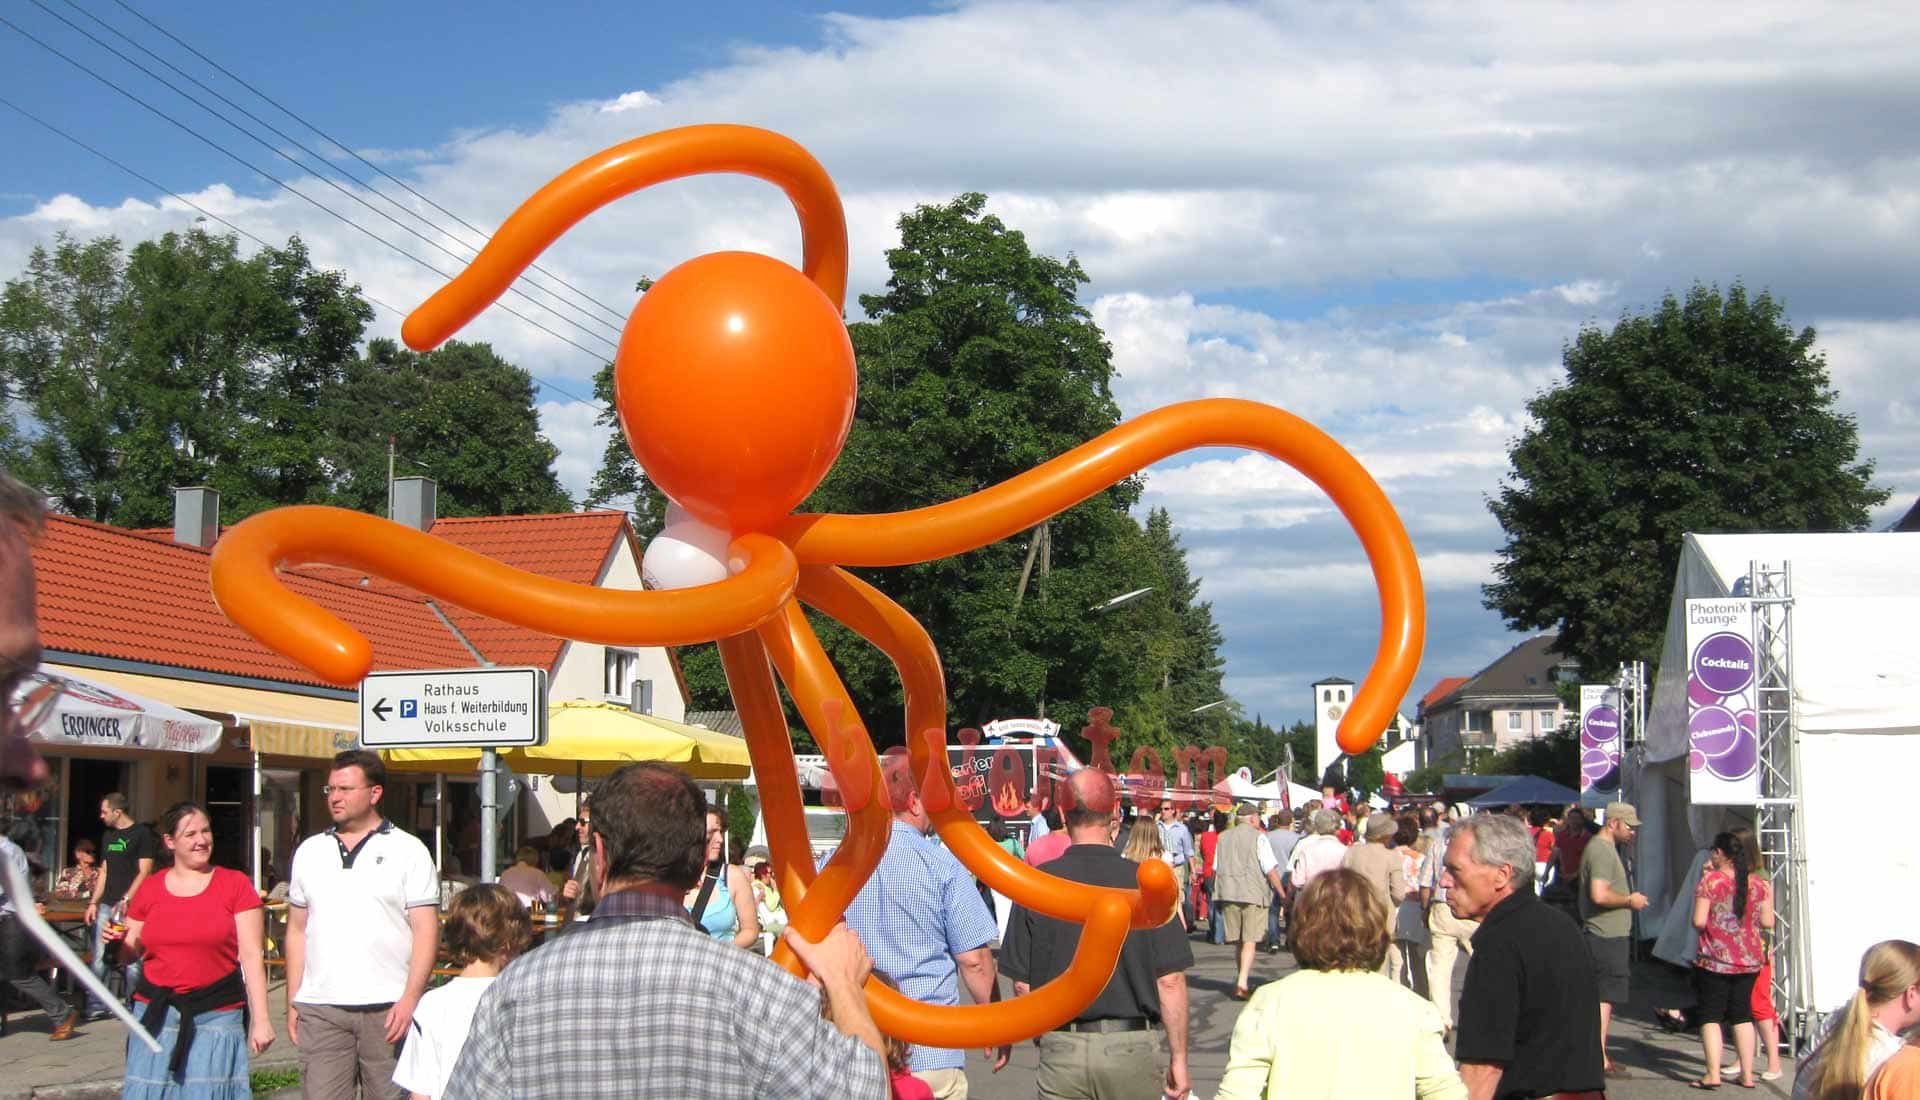 Big Balloon Sculpture in Neubiberg mit ballontom